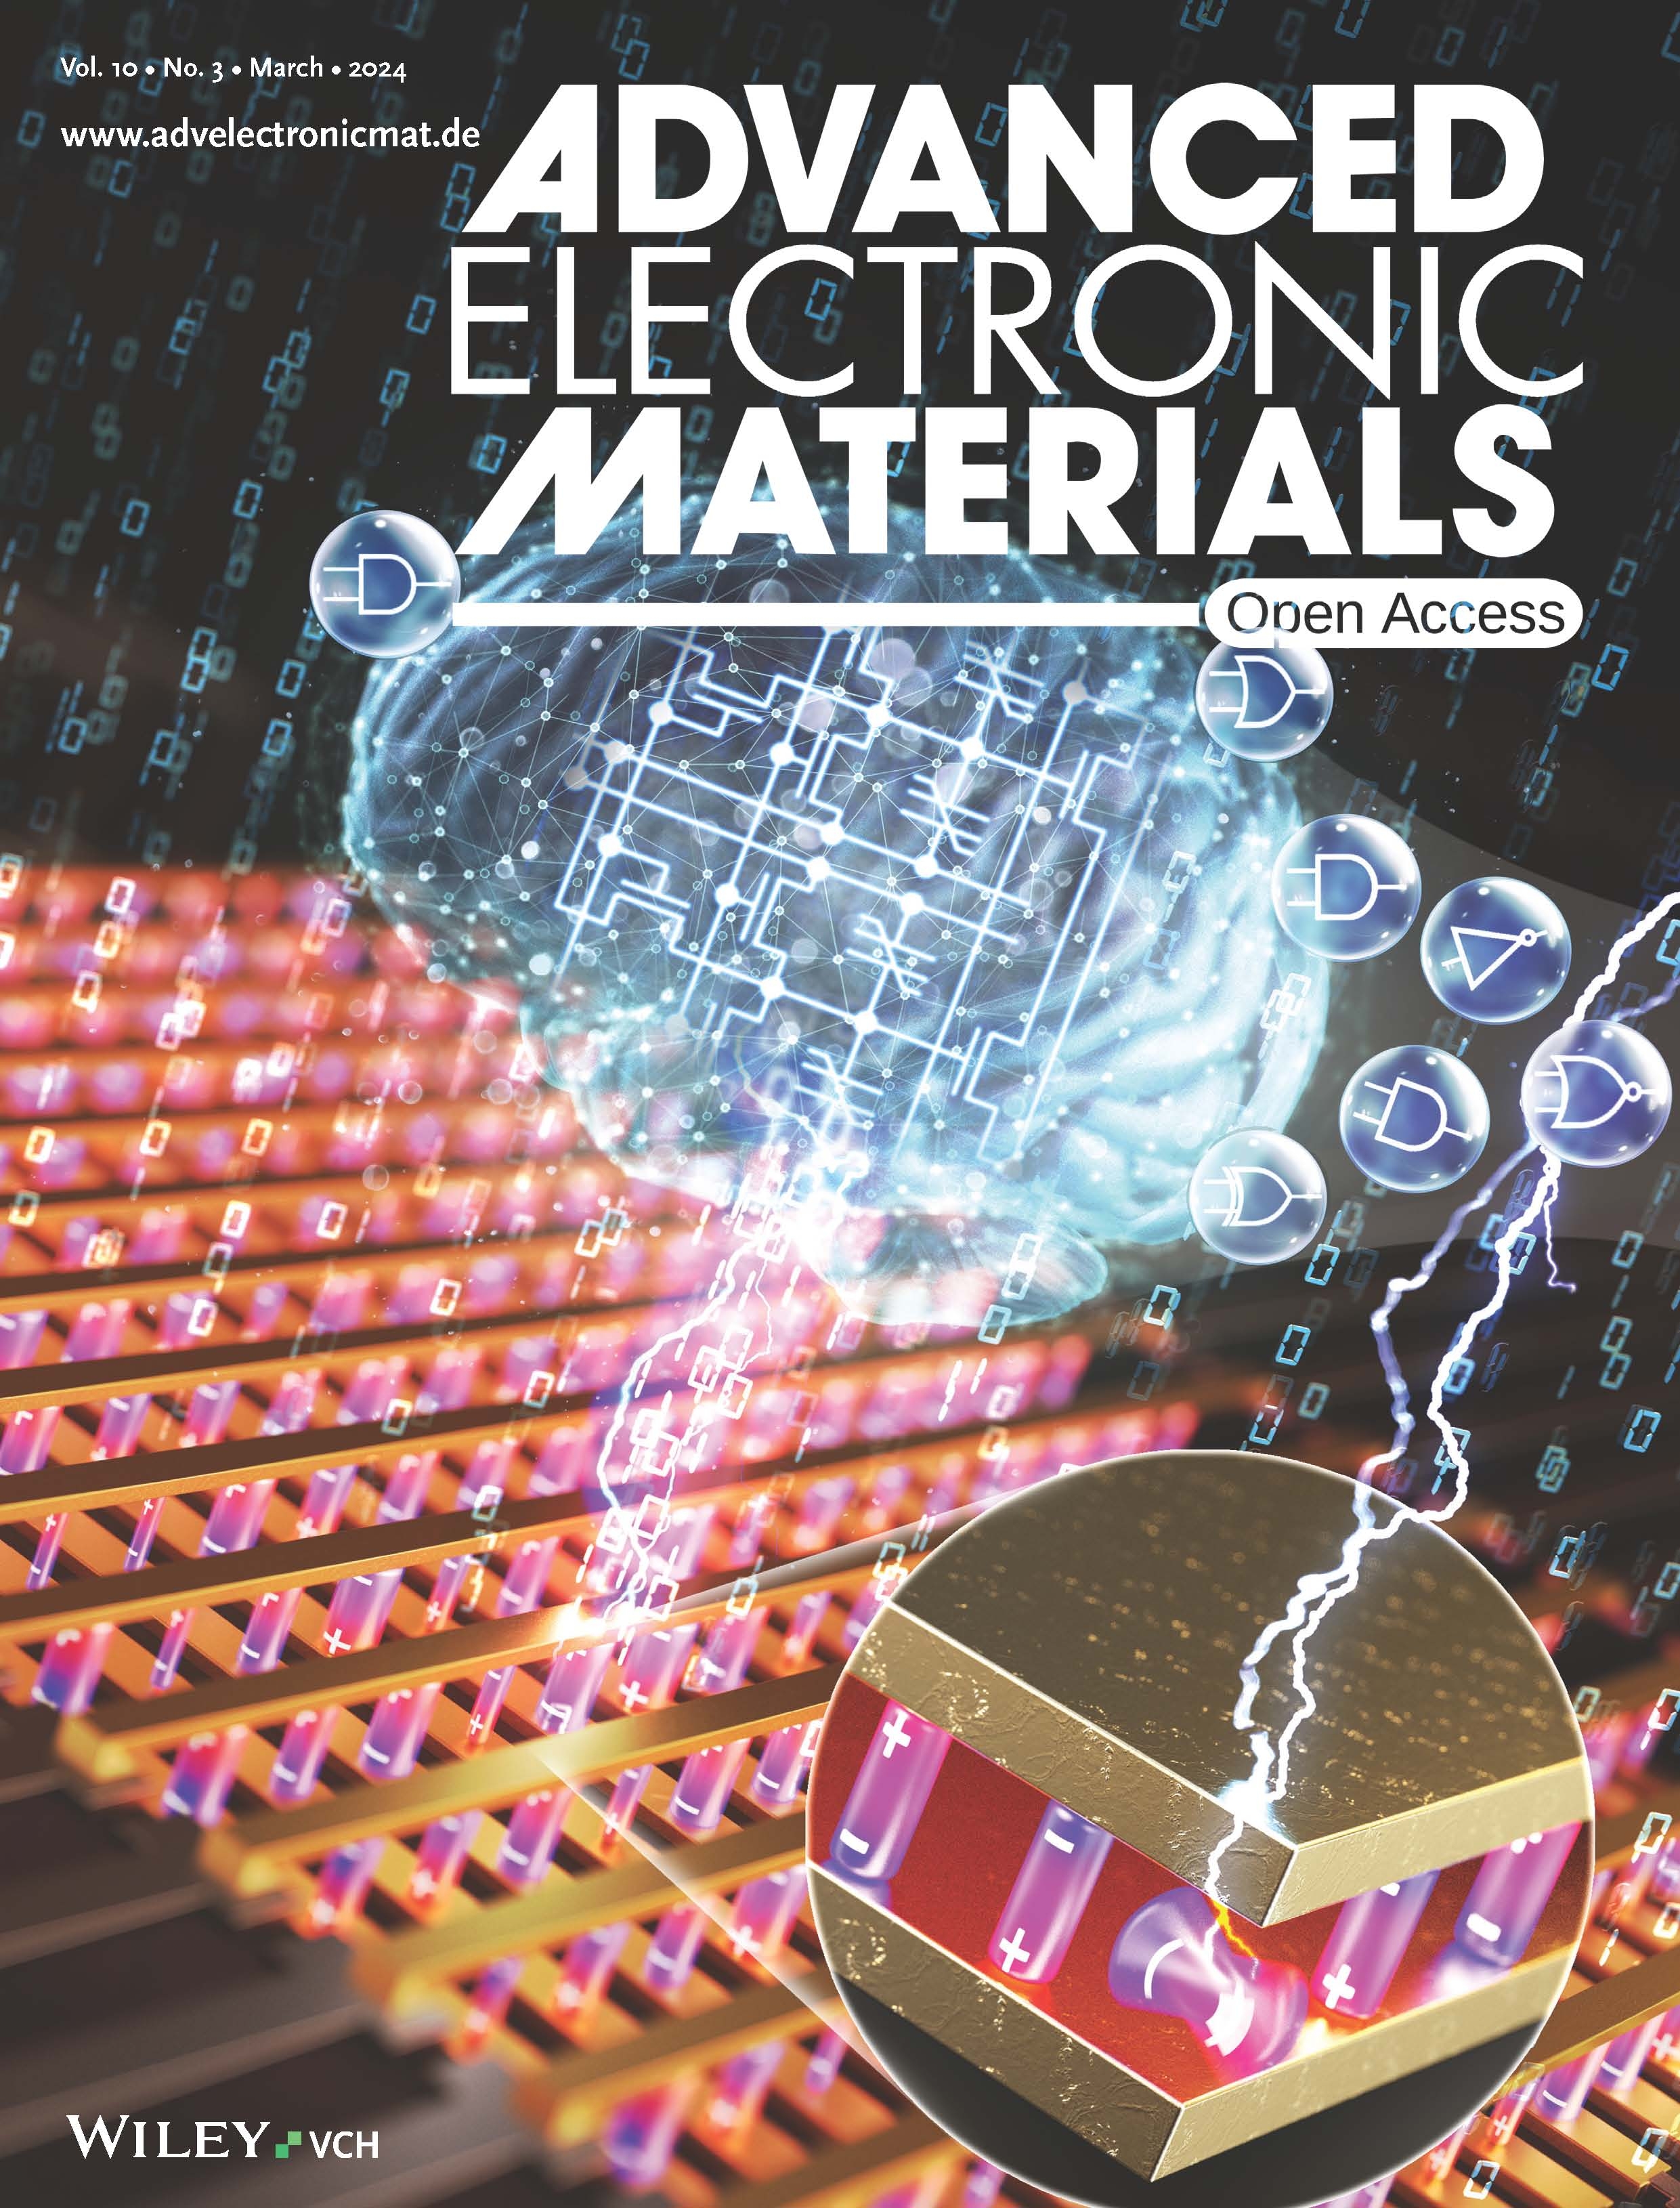 ‘Advanced Electronic Materials’ 표지 이미지. 한국공대 제공